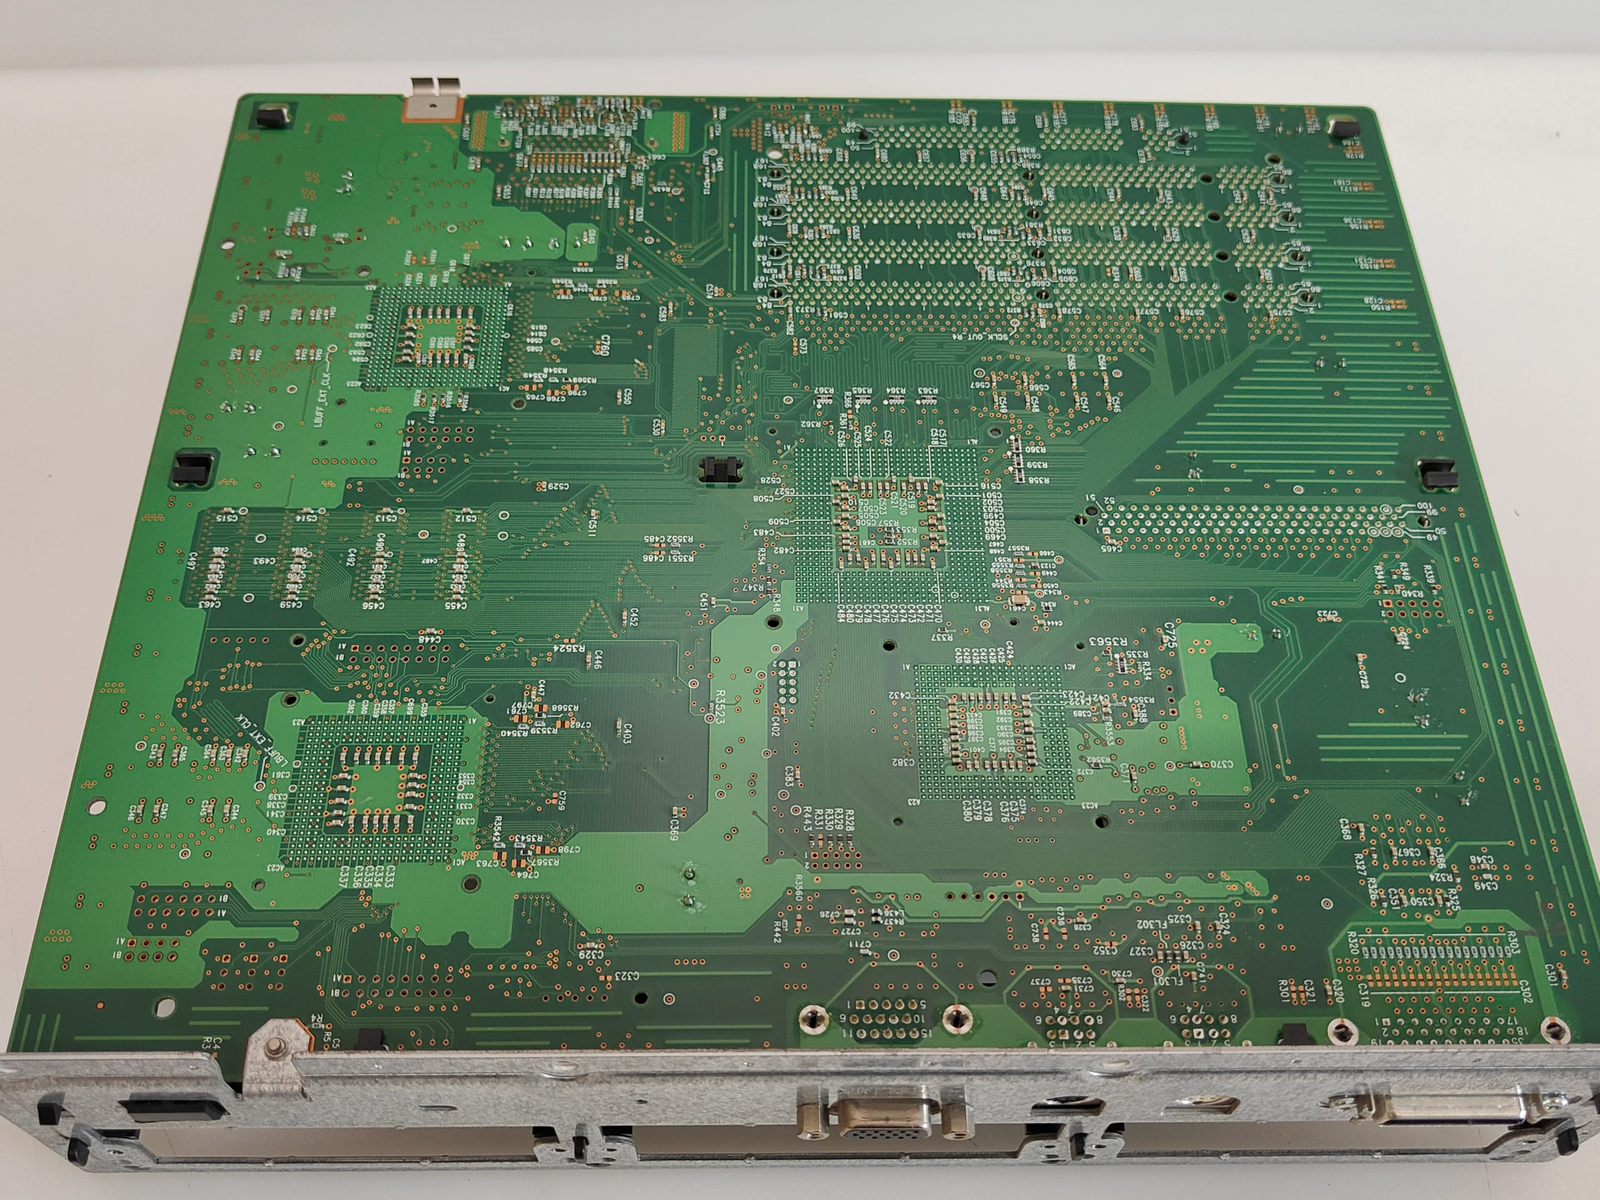 HP Color LaserJet 9500n Printer - Formatter Board Mainboard - 5851-1483 rev.A